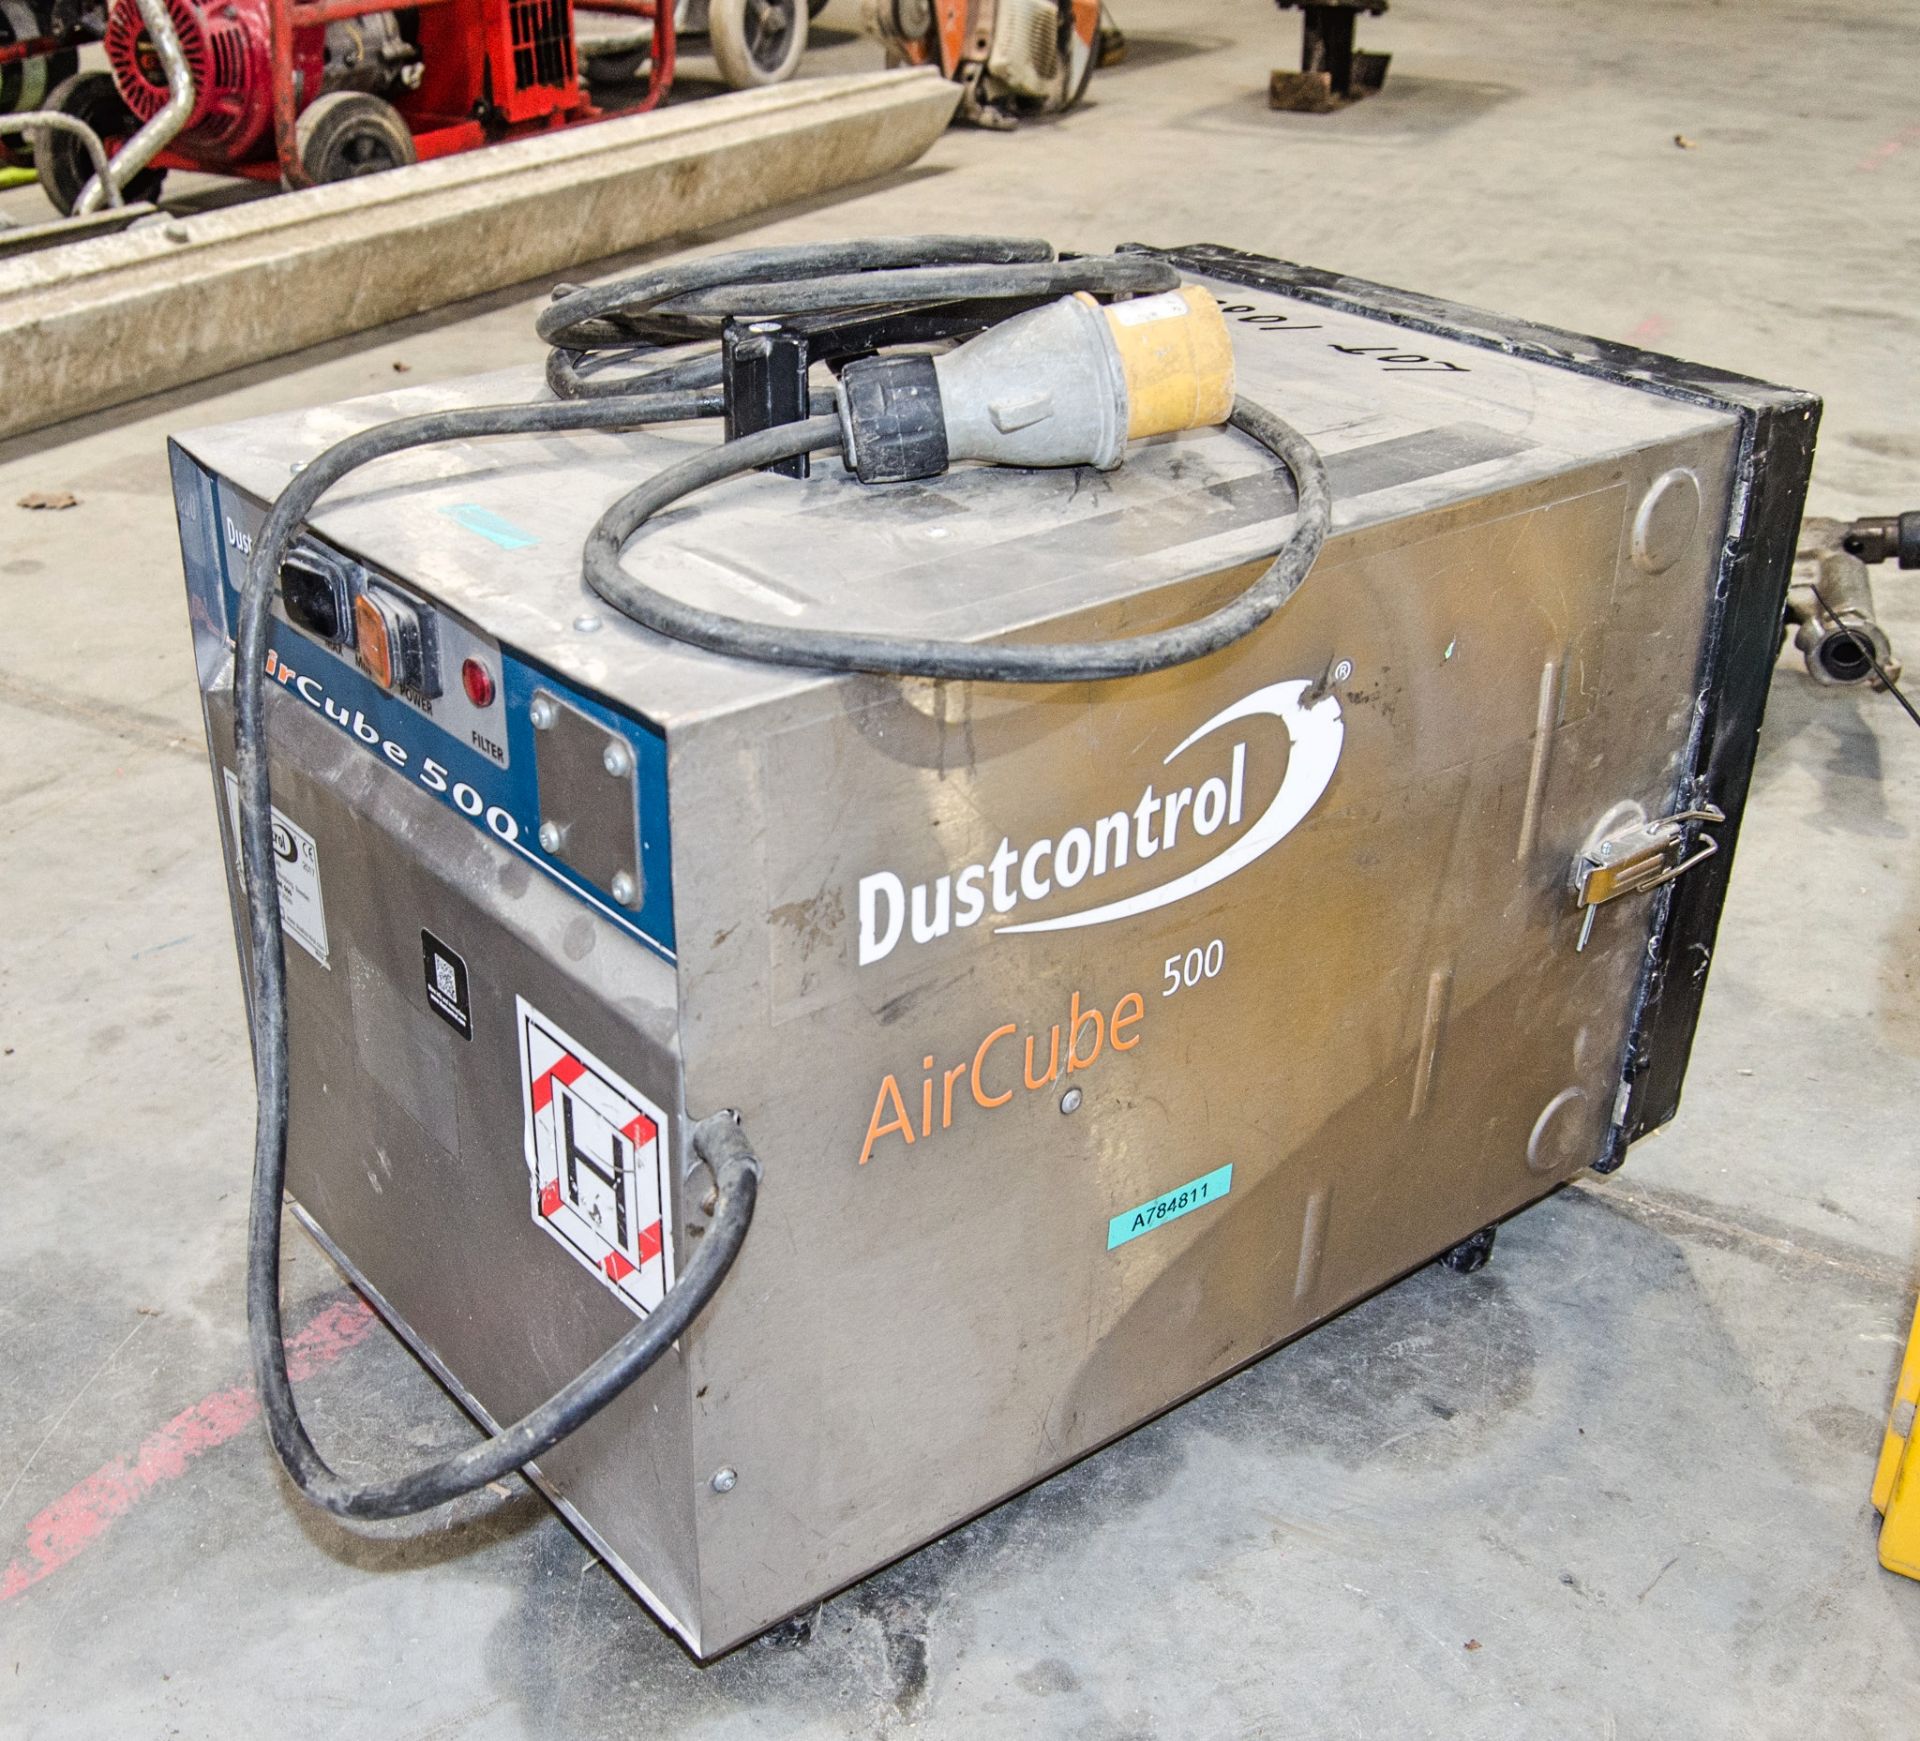 Dustcontrol Air Cube 500 110v dust extraction unit A784811